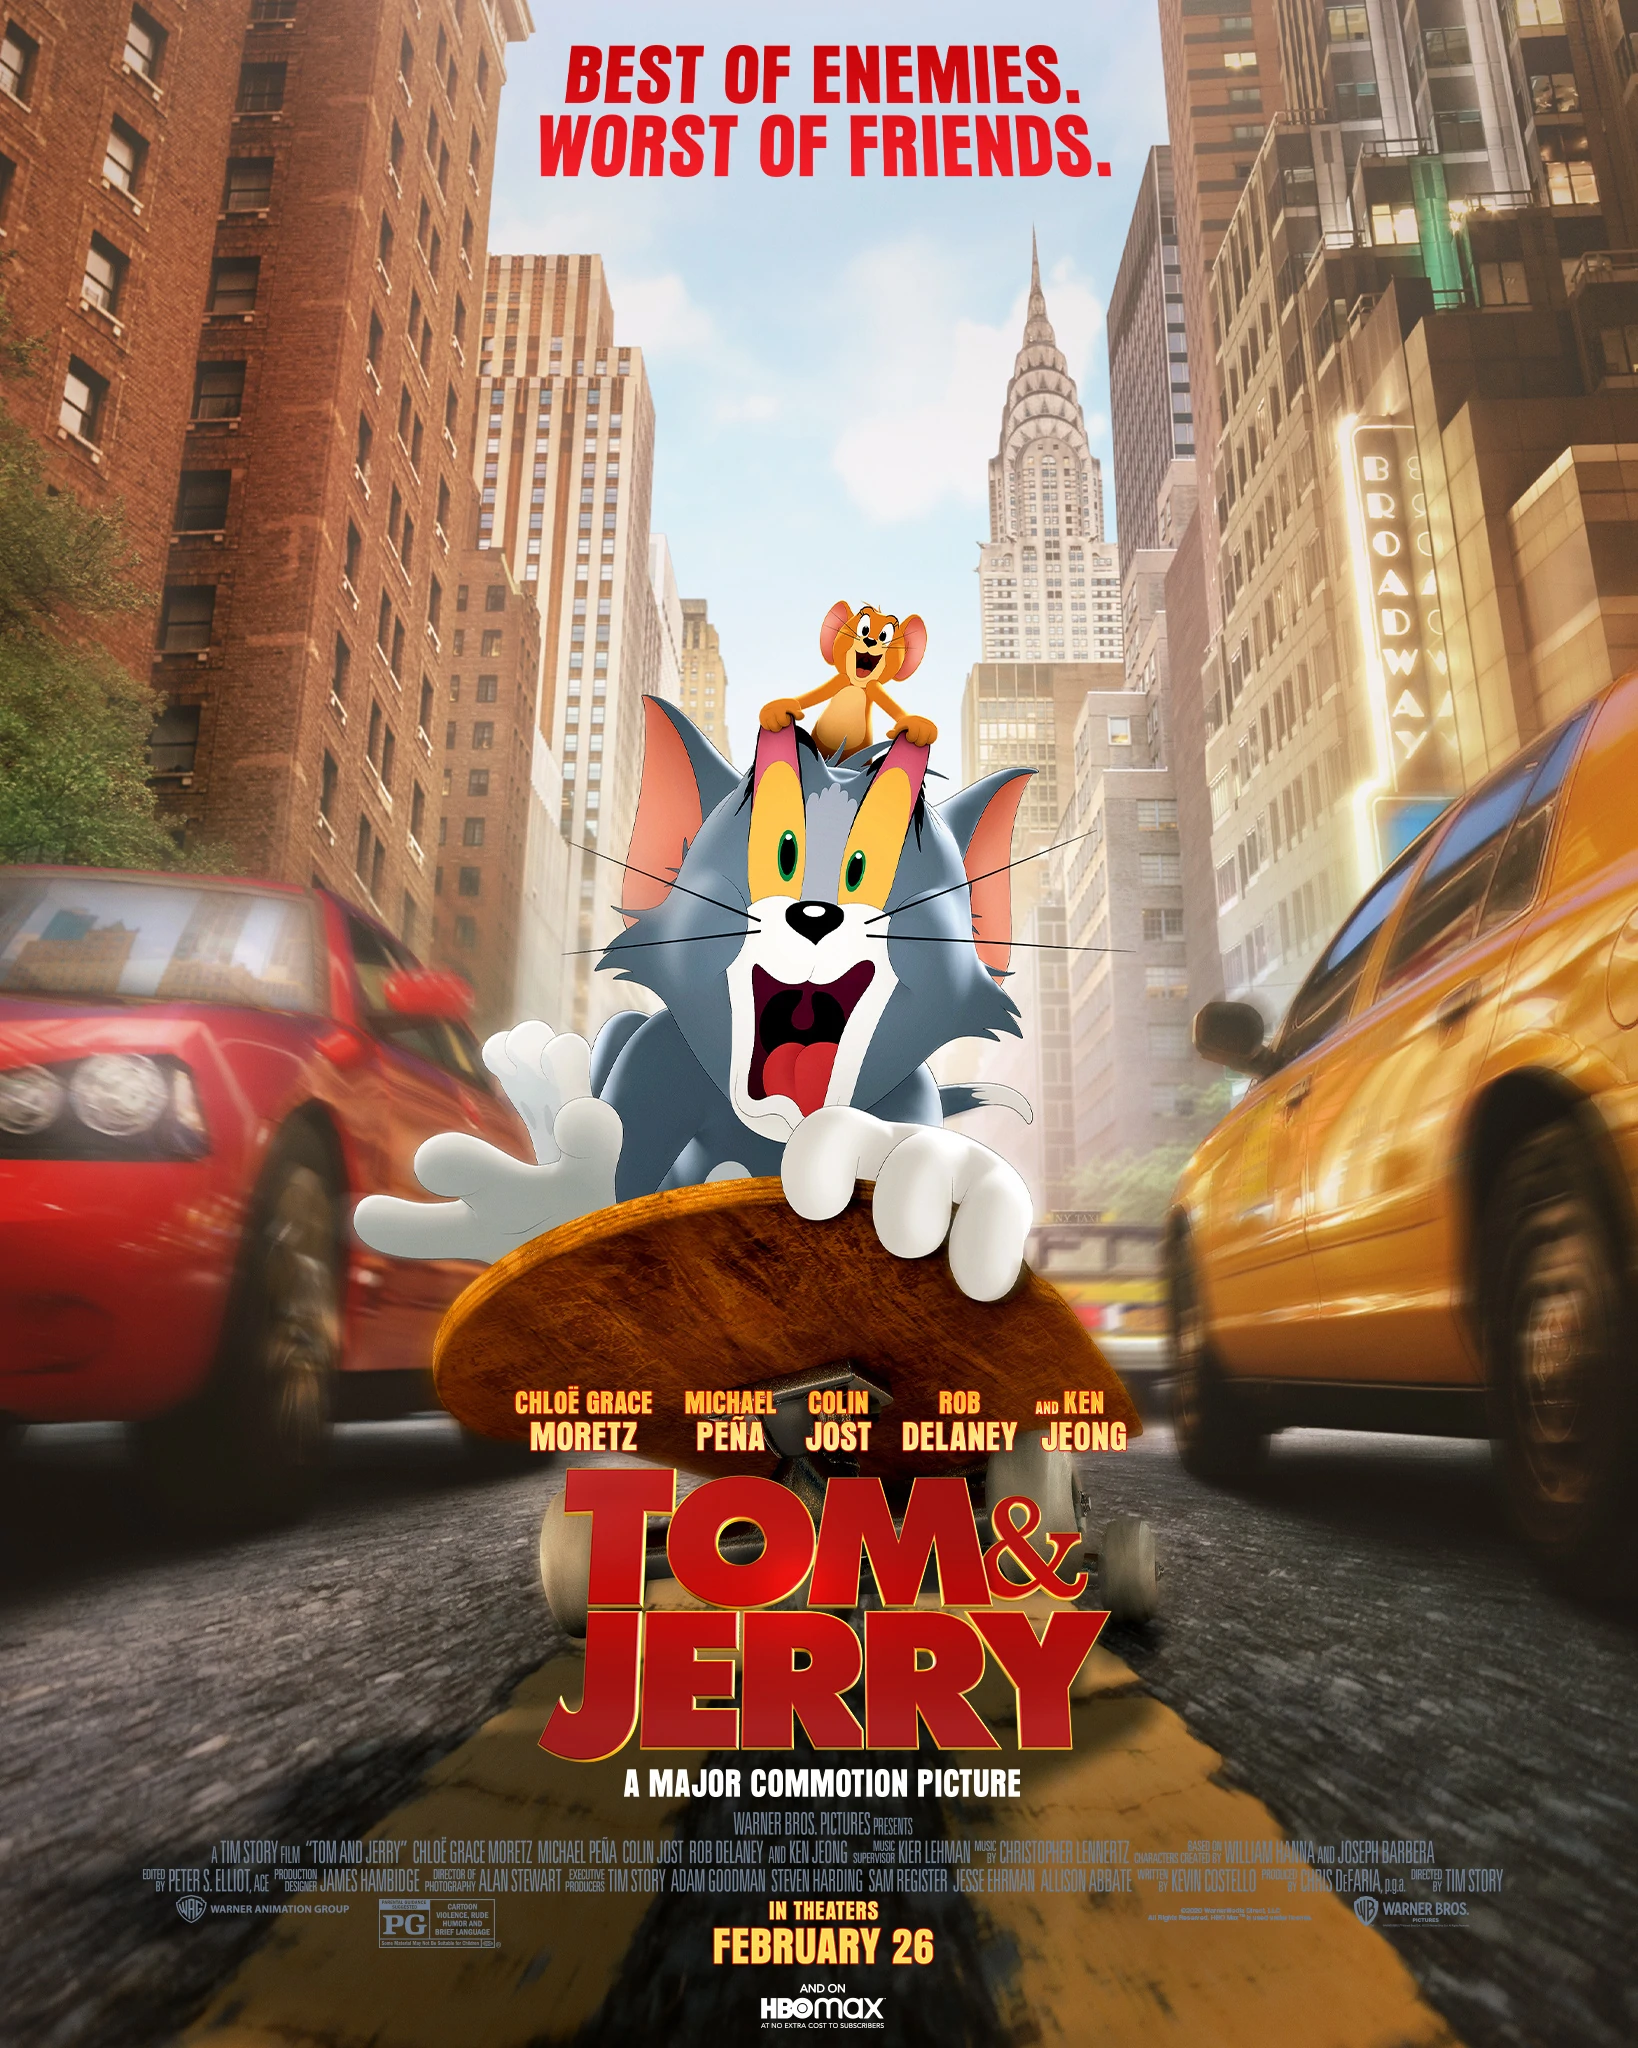 Stiahni si HD Filmy Tom a Jerry / Tom and Jerry (2021)(CZ/SK/HU/EN)[1080p] = CSFD 45%